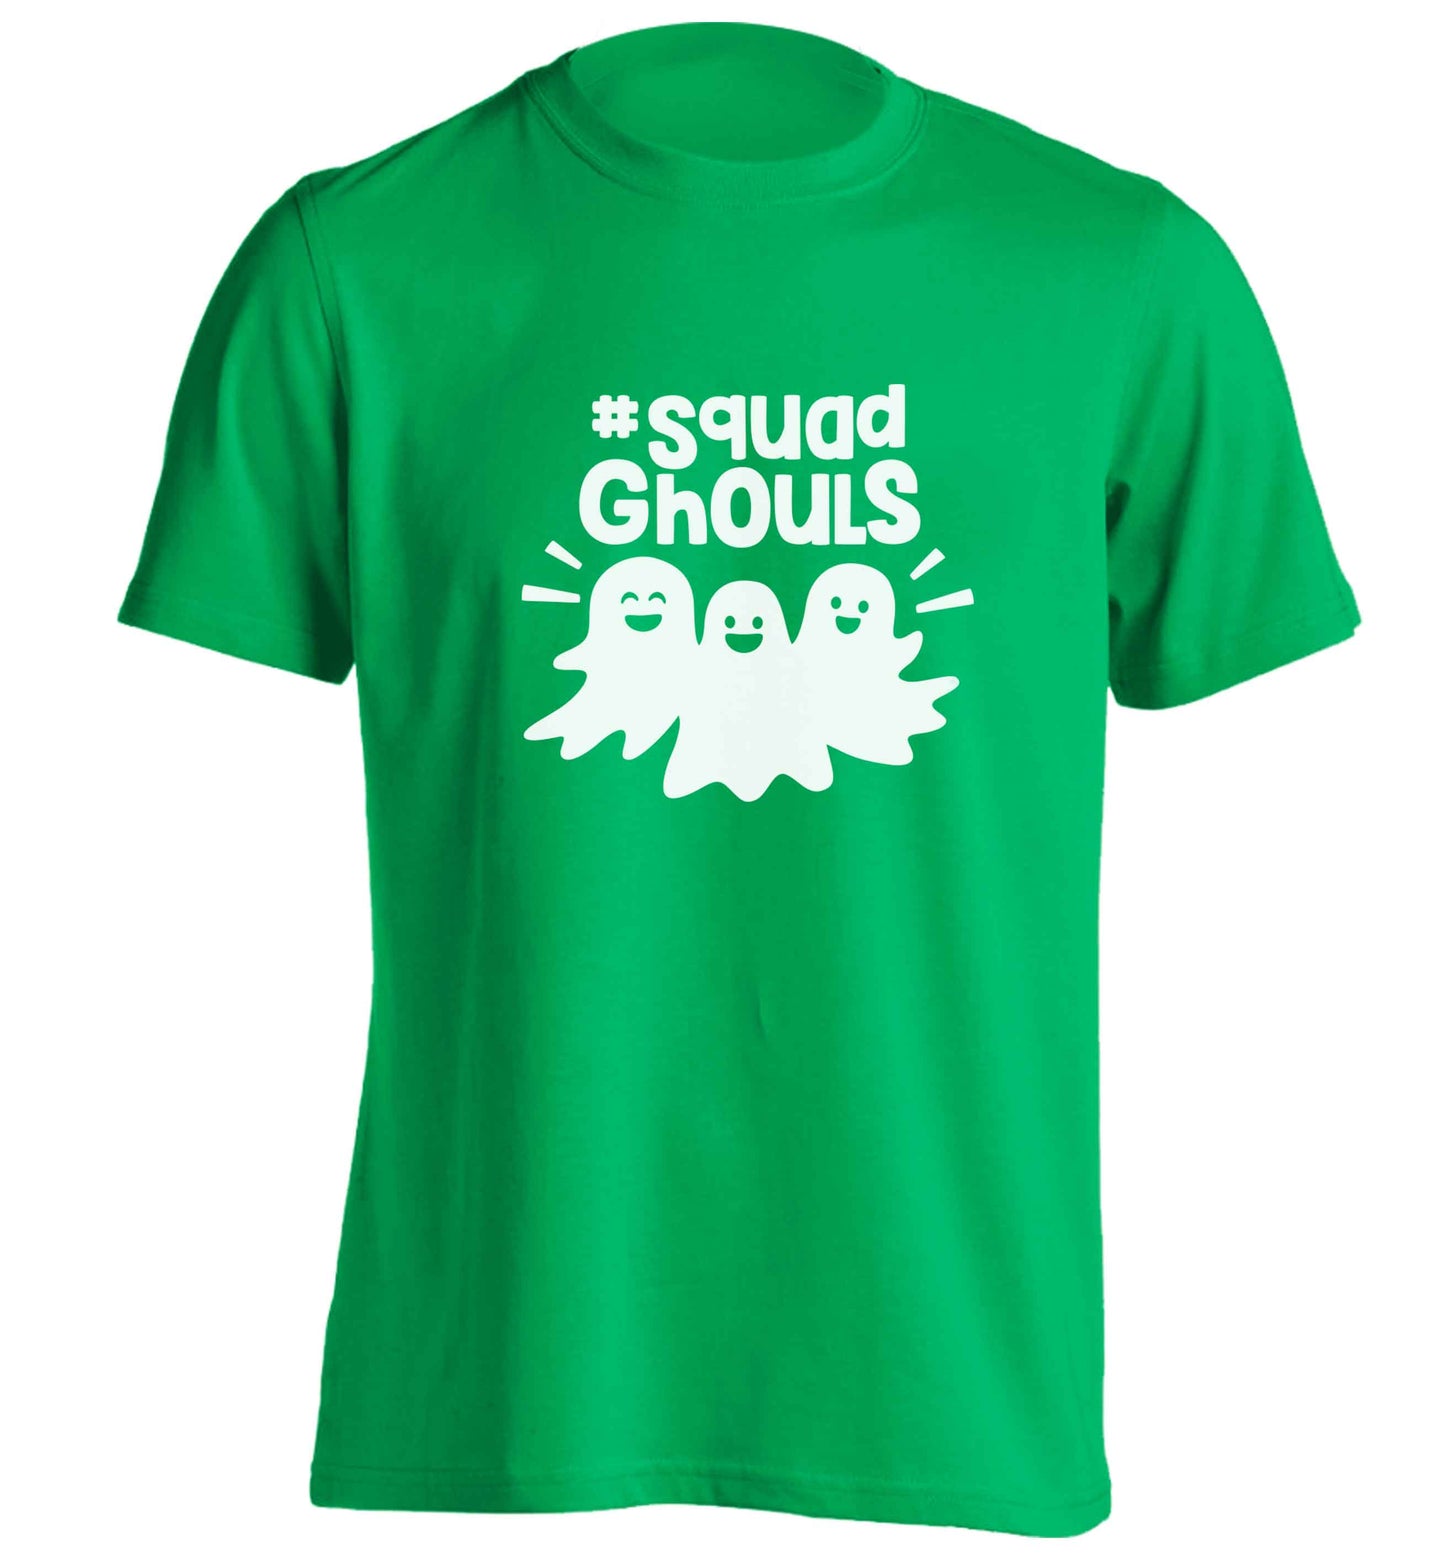 Squad ghouls Kit adults unisex green Tshirt 2XL